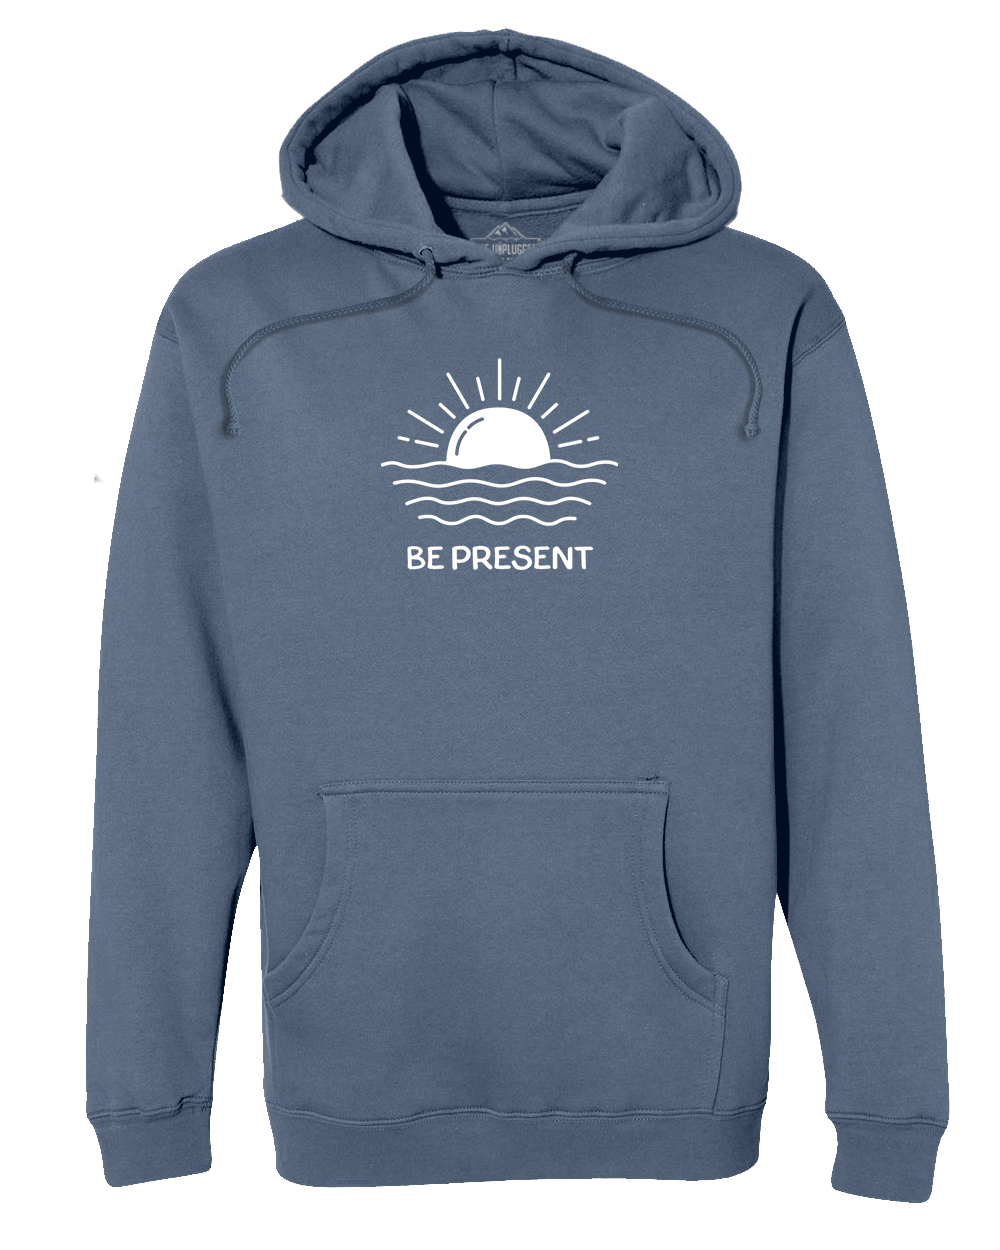 OCEAN SUNSET Premium Heavyweight Hooded Sweatshirt